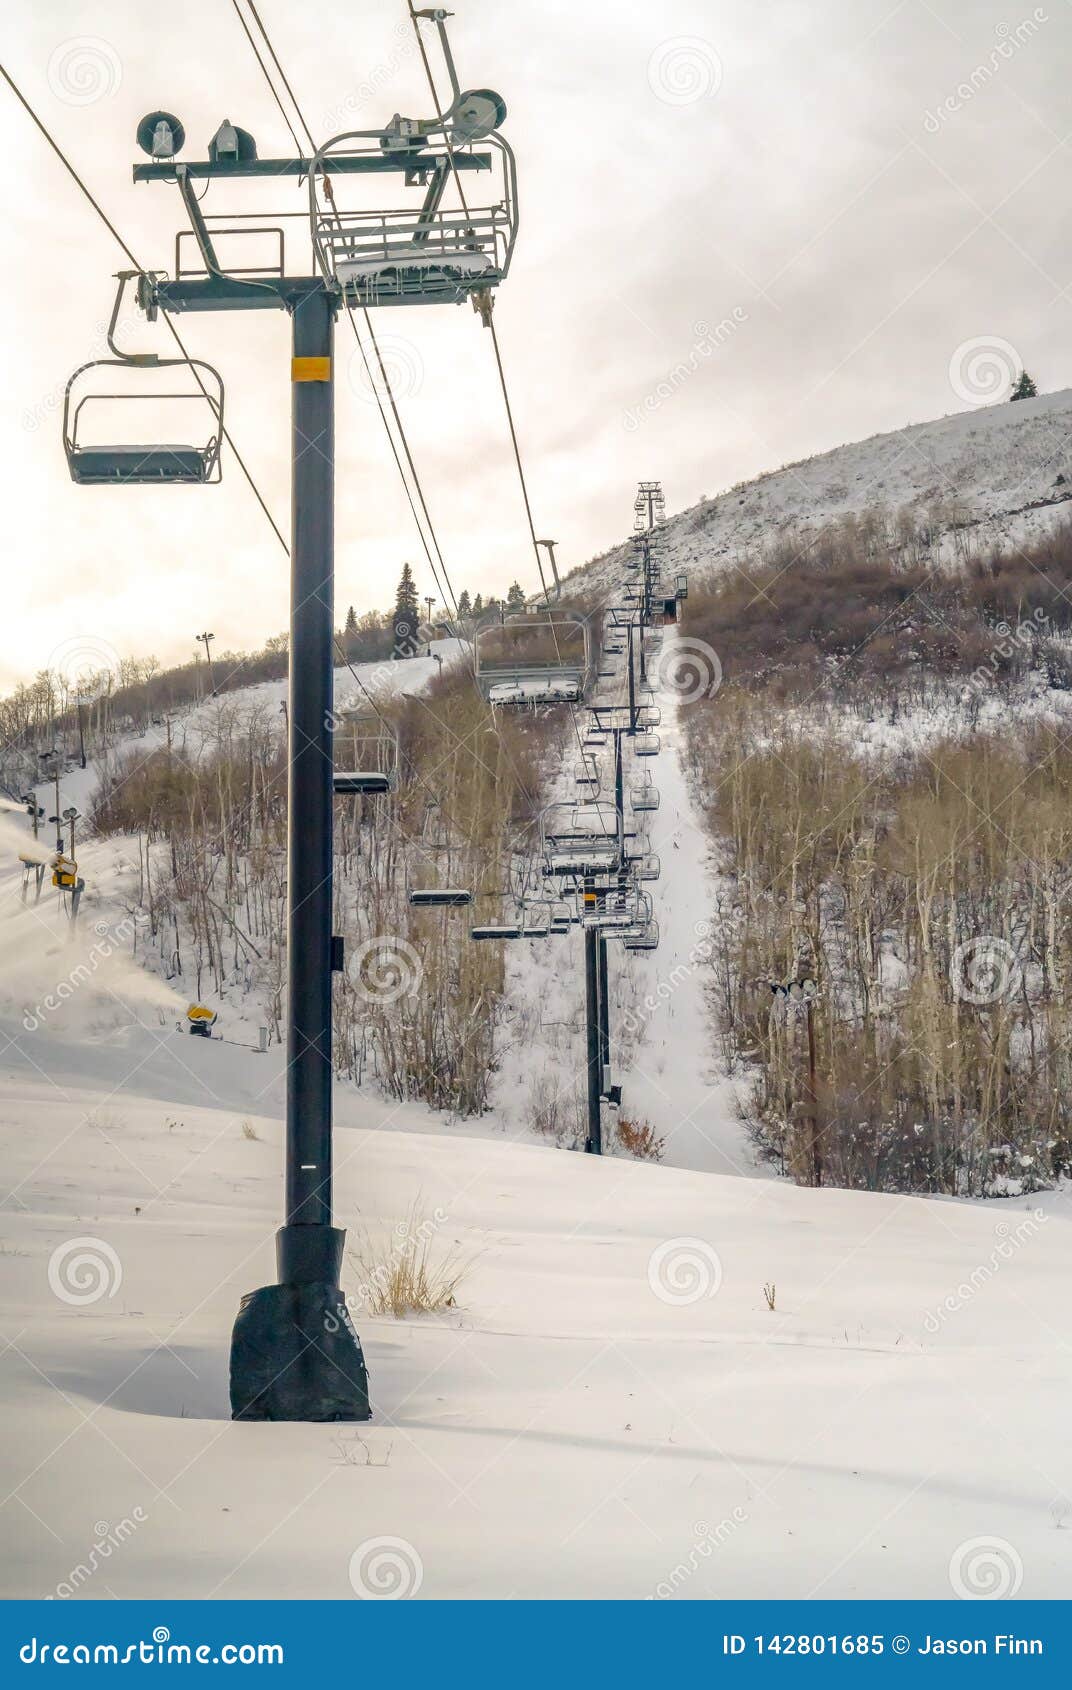 https://thumbs.dreamstime.com/z/frosty-ski-lifts-snow-cannons-park-city-frosty-ski-lifts-snow-cannons-park-city-frosty-ski-lifts-park-city-over-142801685.jpg